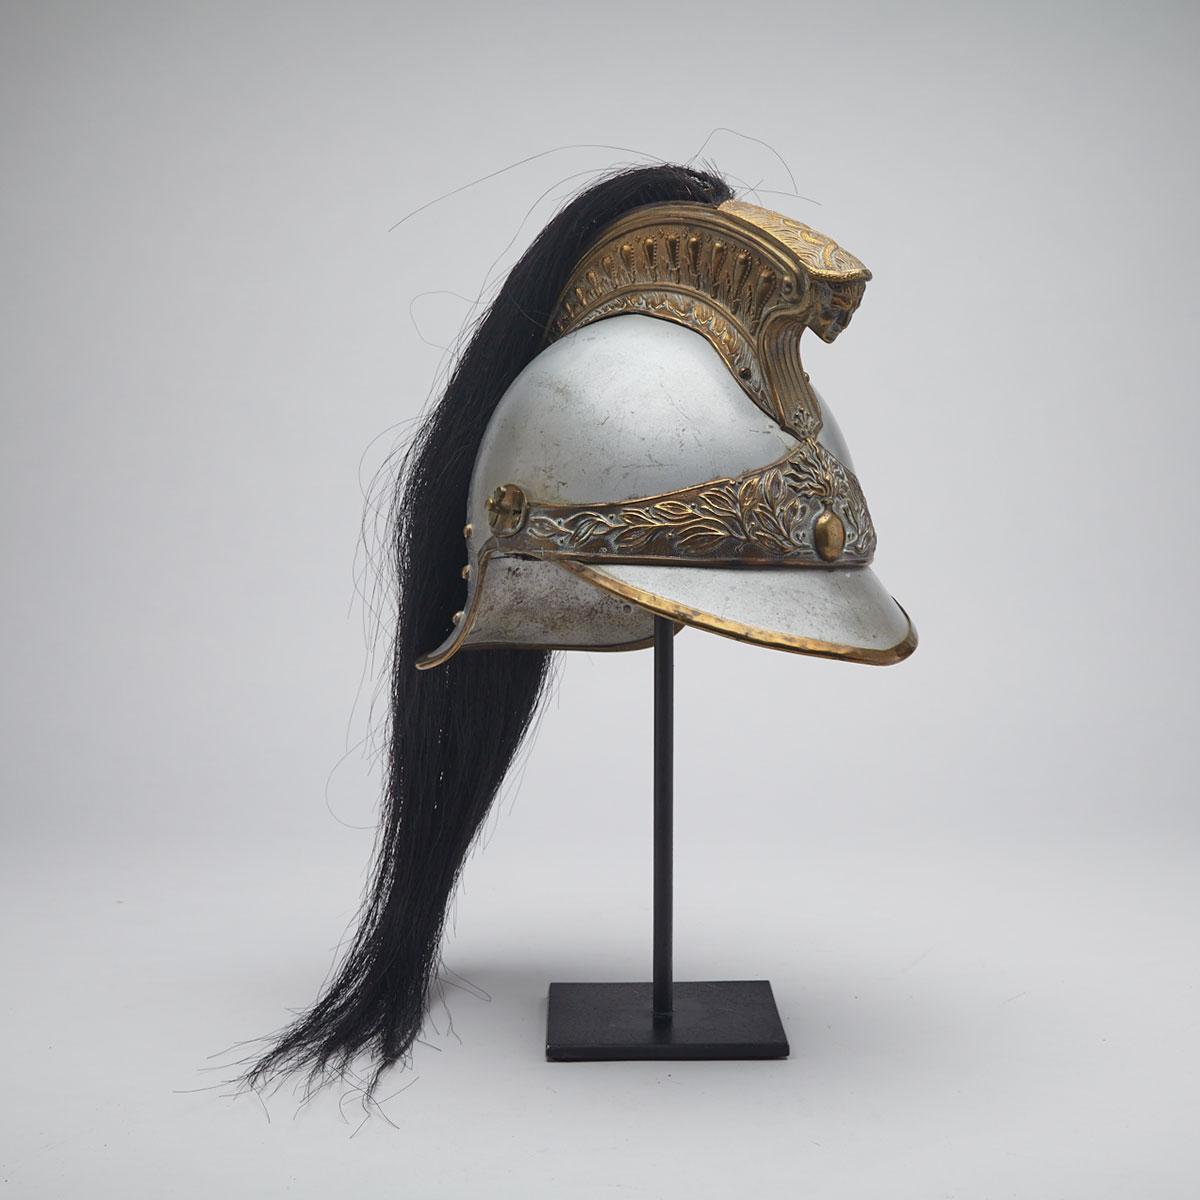 French Thrid Republic Model 1872 Dragoon’s Helmet, 19th century